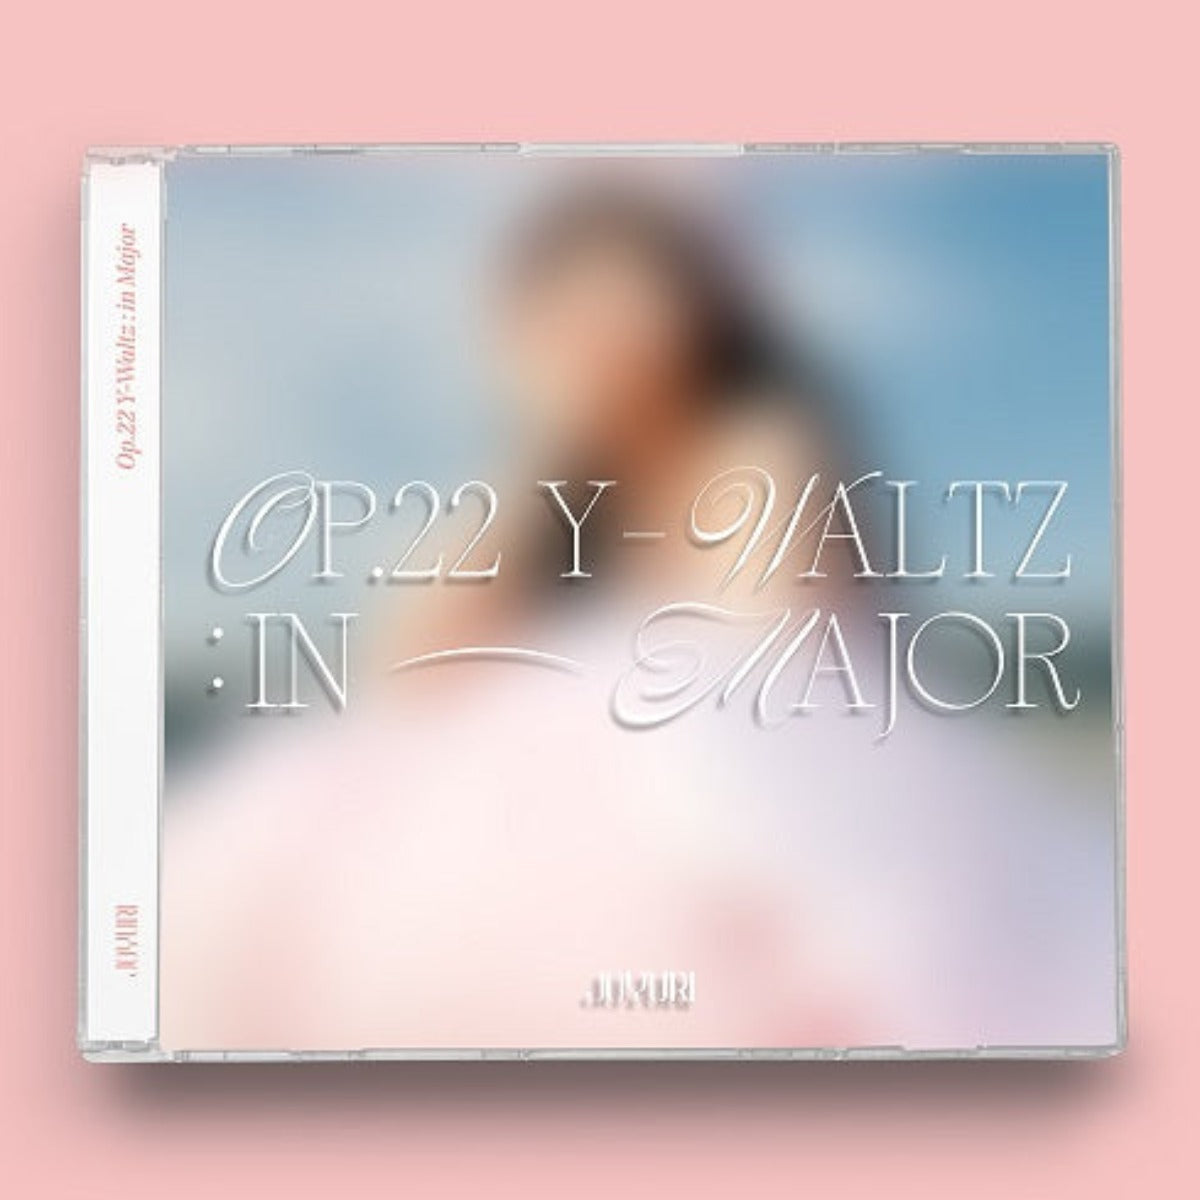 Jo Yuri Mini Album Vol. 1 - Op.22 Y-Waltz : in Major (Jewel Version) (Limited Edition)